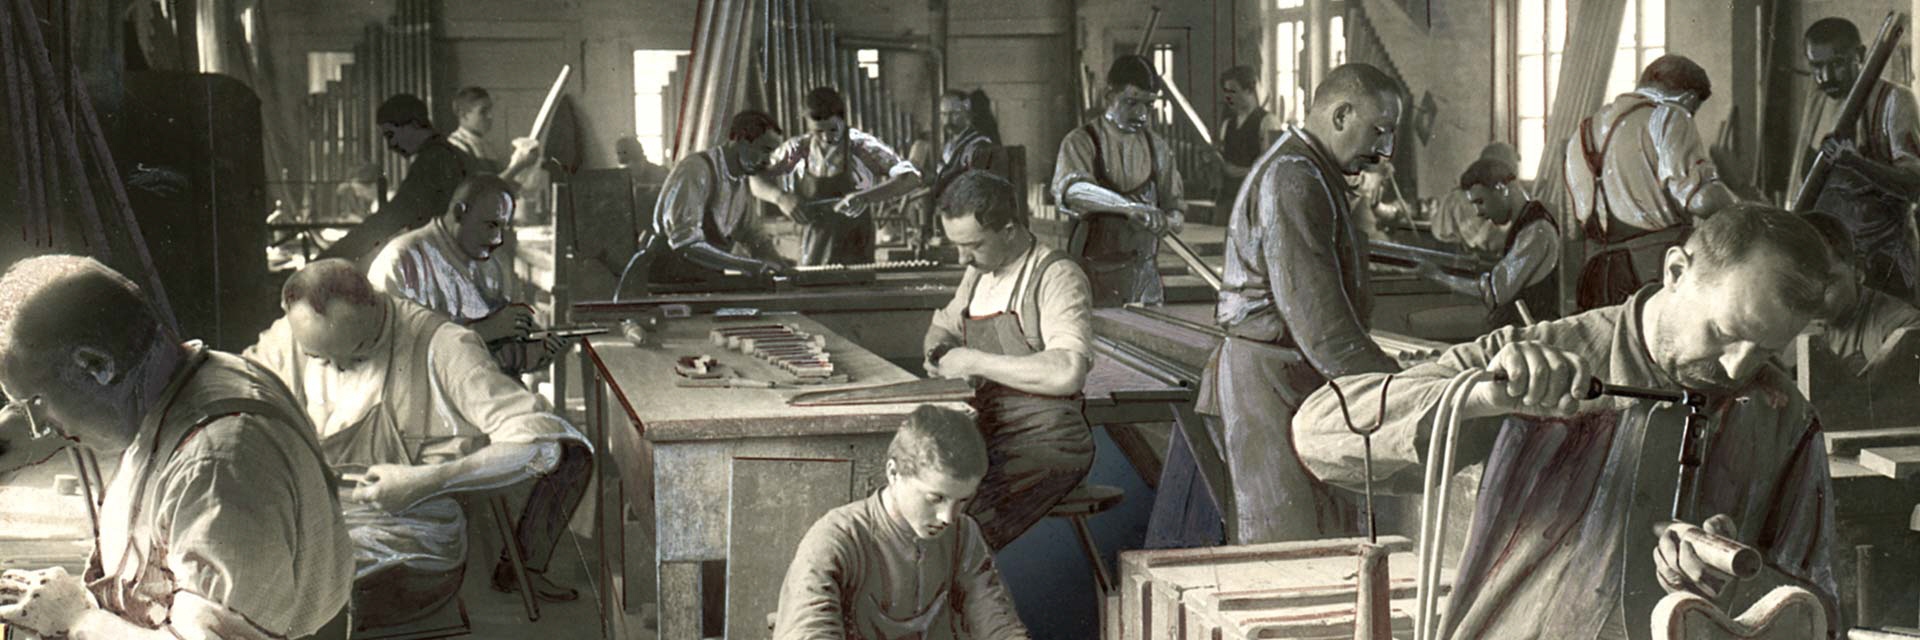 Pfeifenwerkstätte etwa 1905 Ludwigsburg